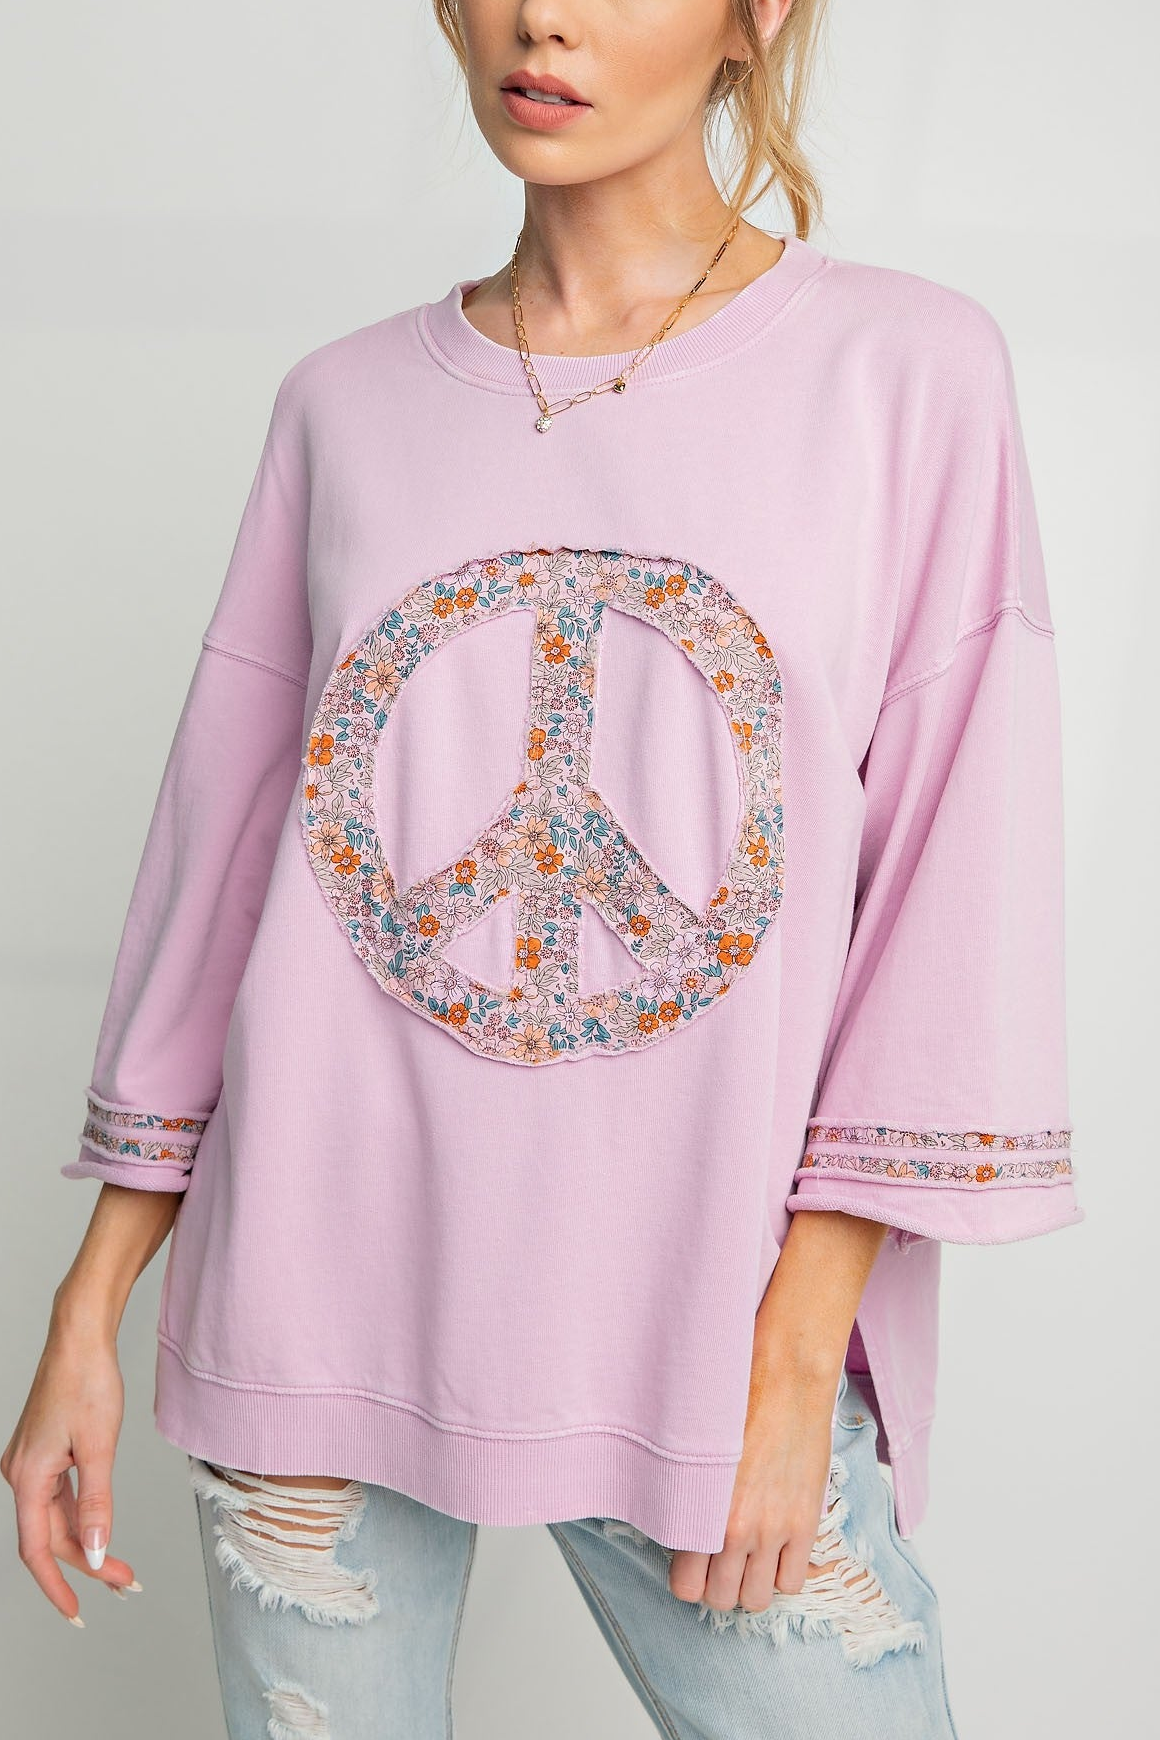 Cotton Candy Peace Sweatshirt